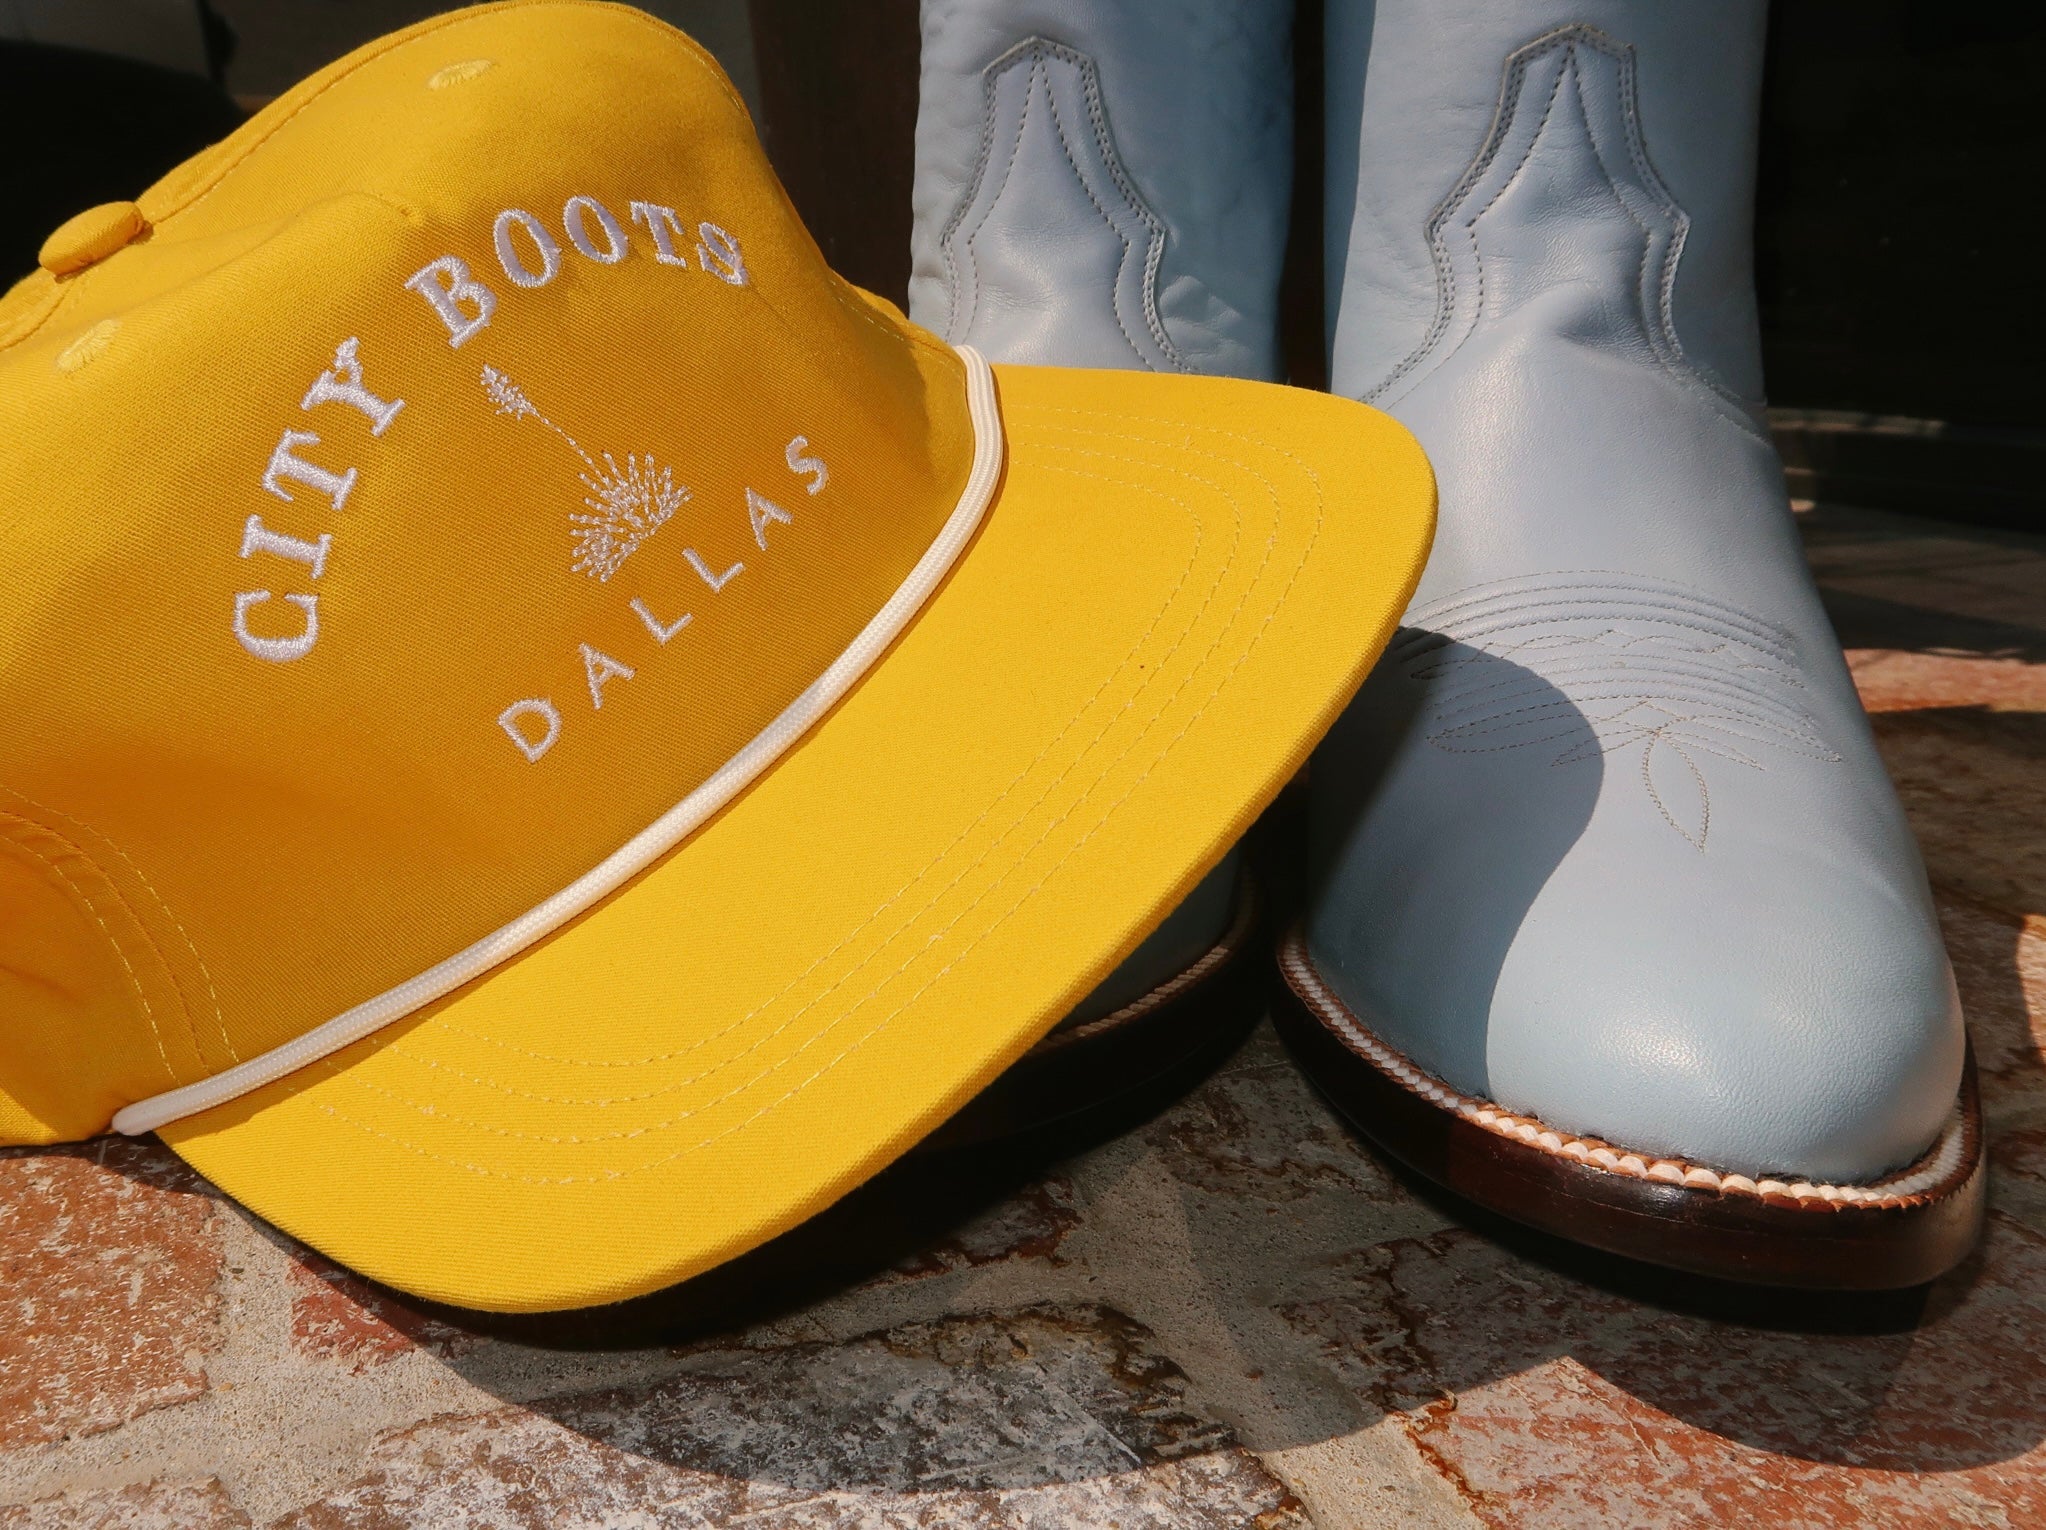 CITY Boots - Texas Women's Snapback Hat